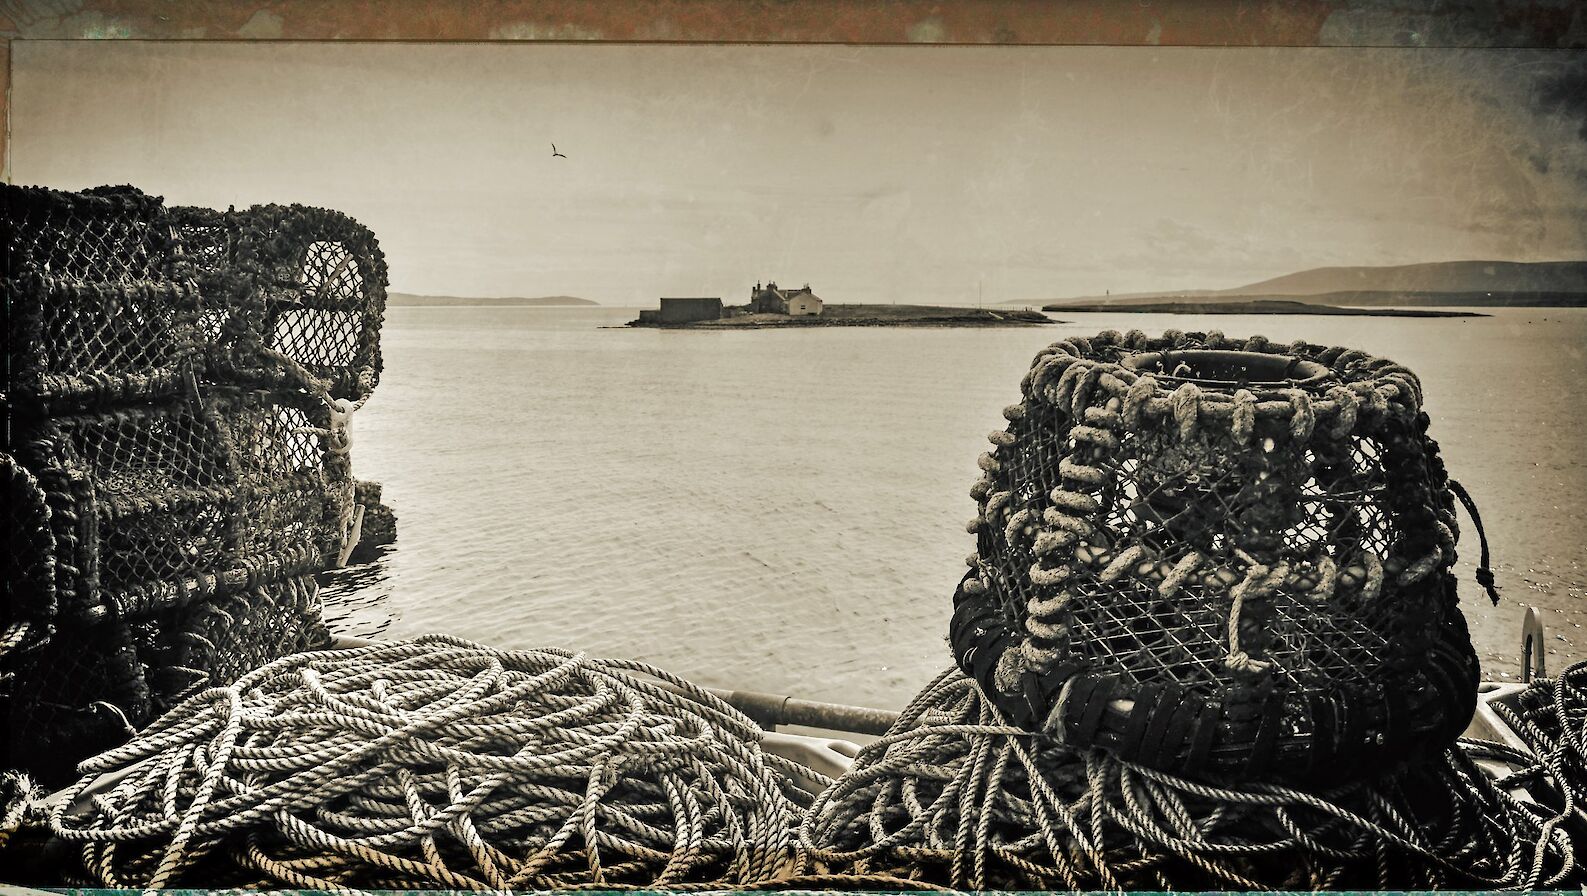 The inner holms in Stromness harbour - image by Glenn McNaughton